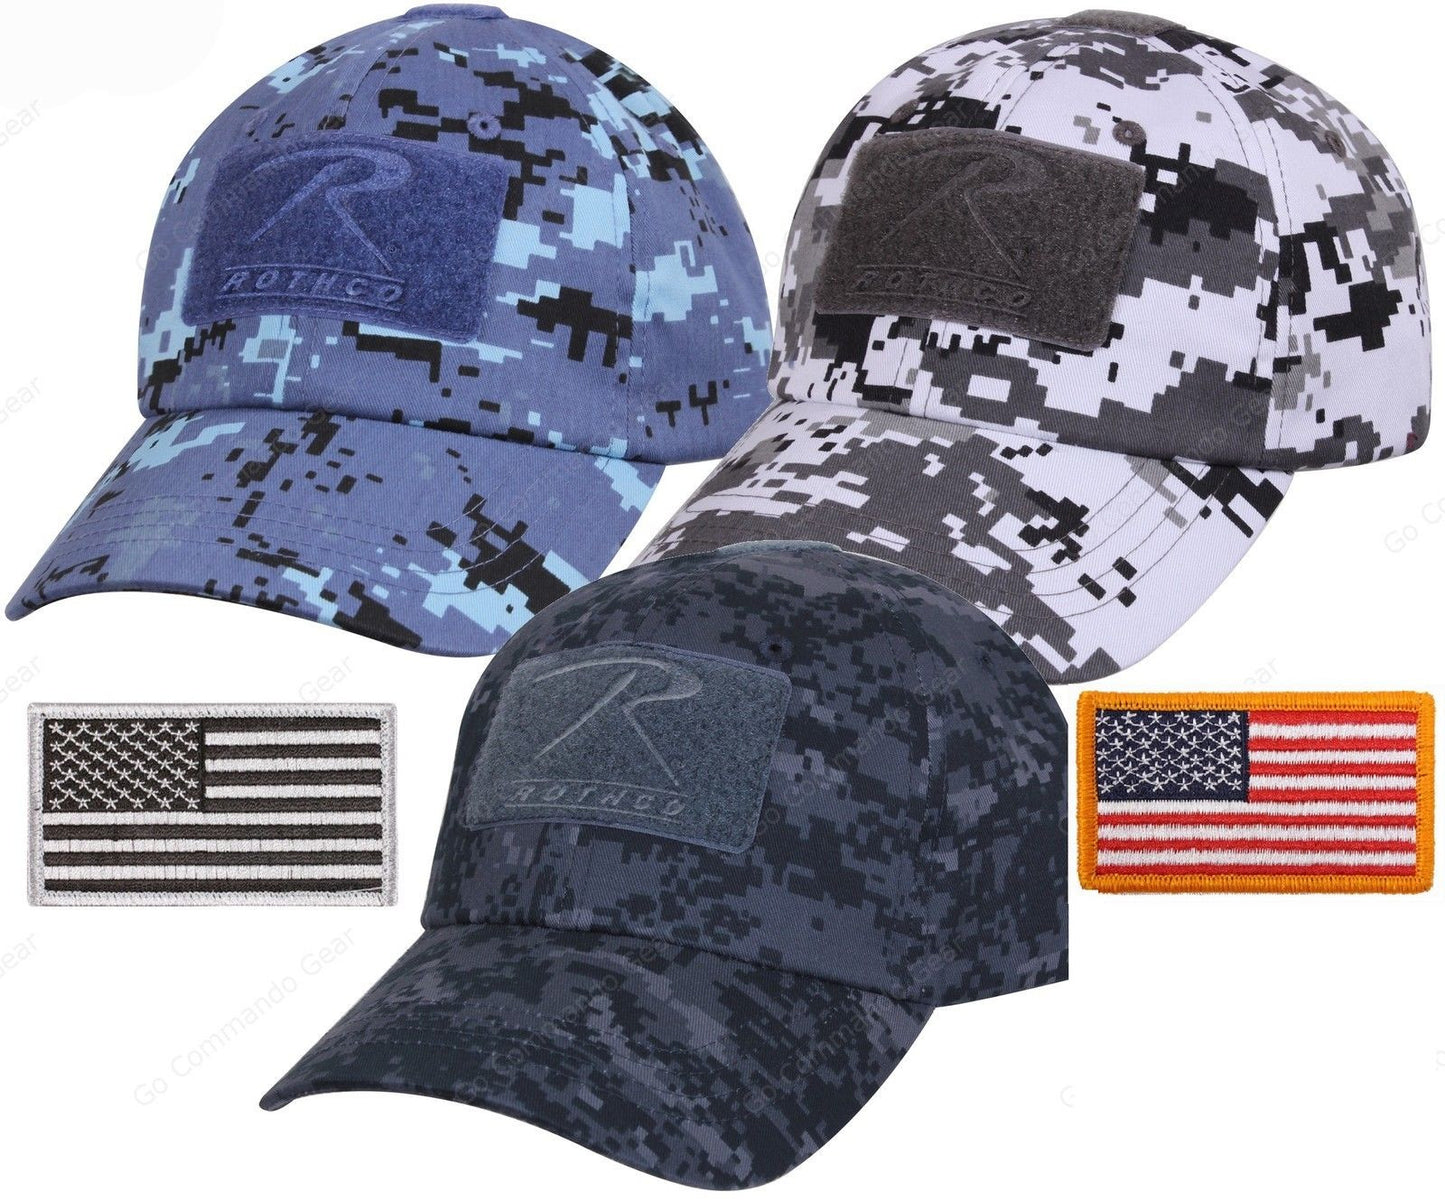 Mens Digital Camouflage Tactical Cap & USA Flag Patch - Rothco Camo Baseball Hat